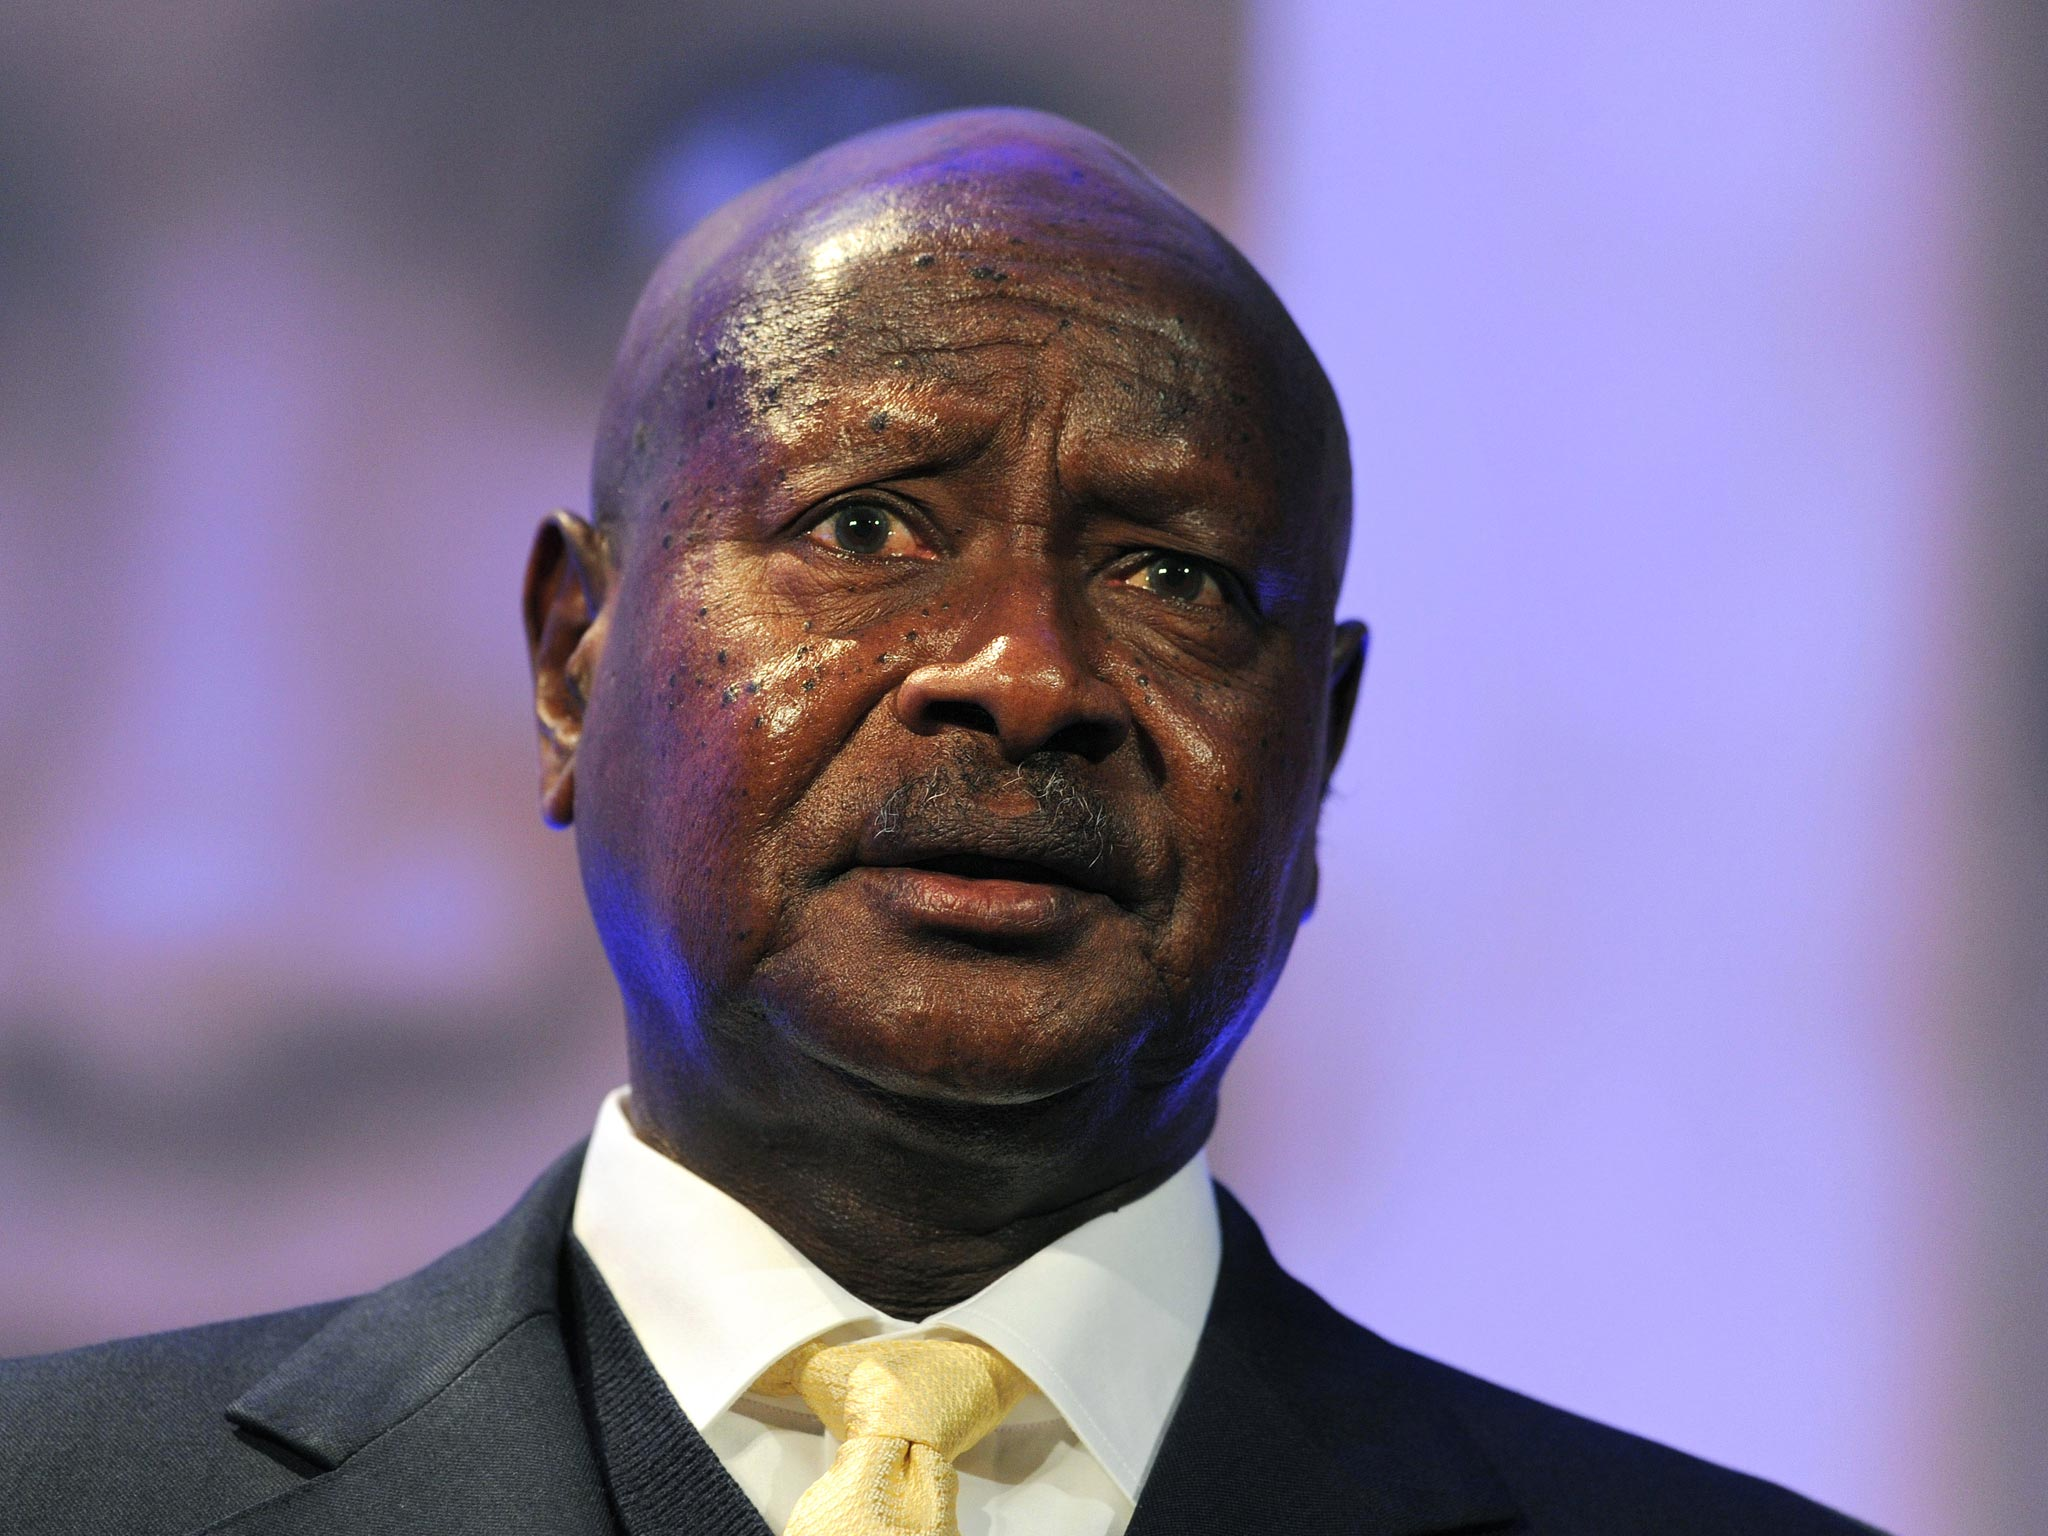 Ugandan President Yoweri Museveni signed the anti-gay bill last month